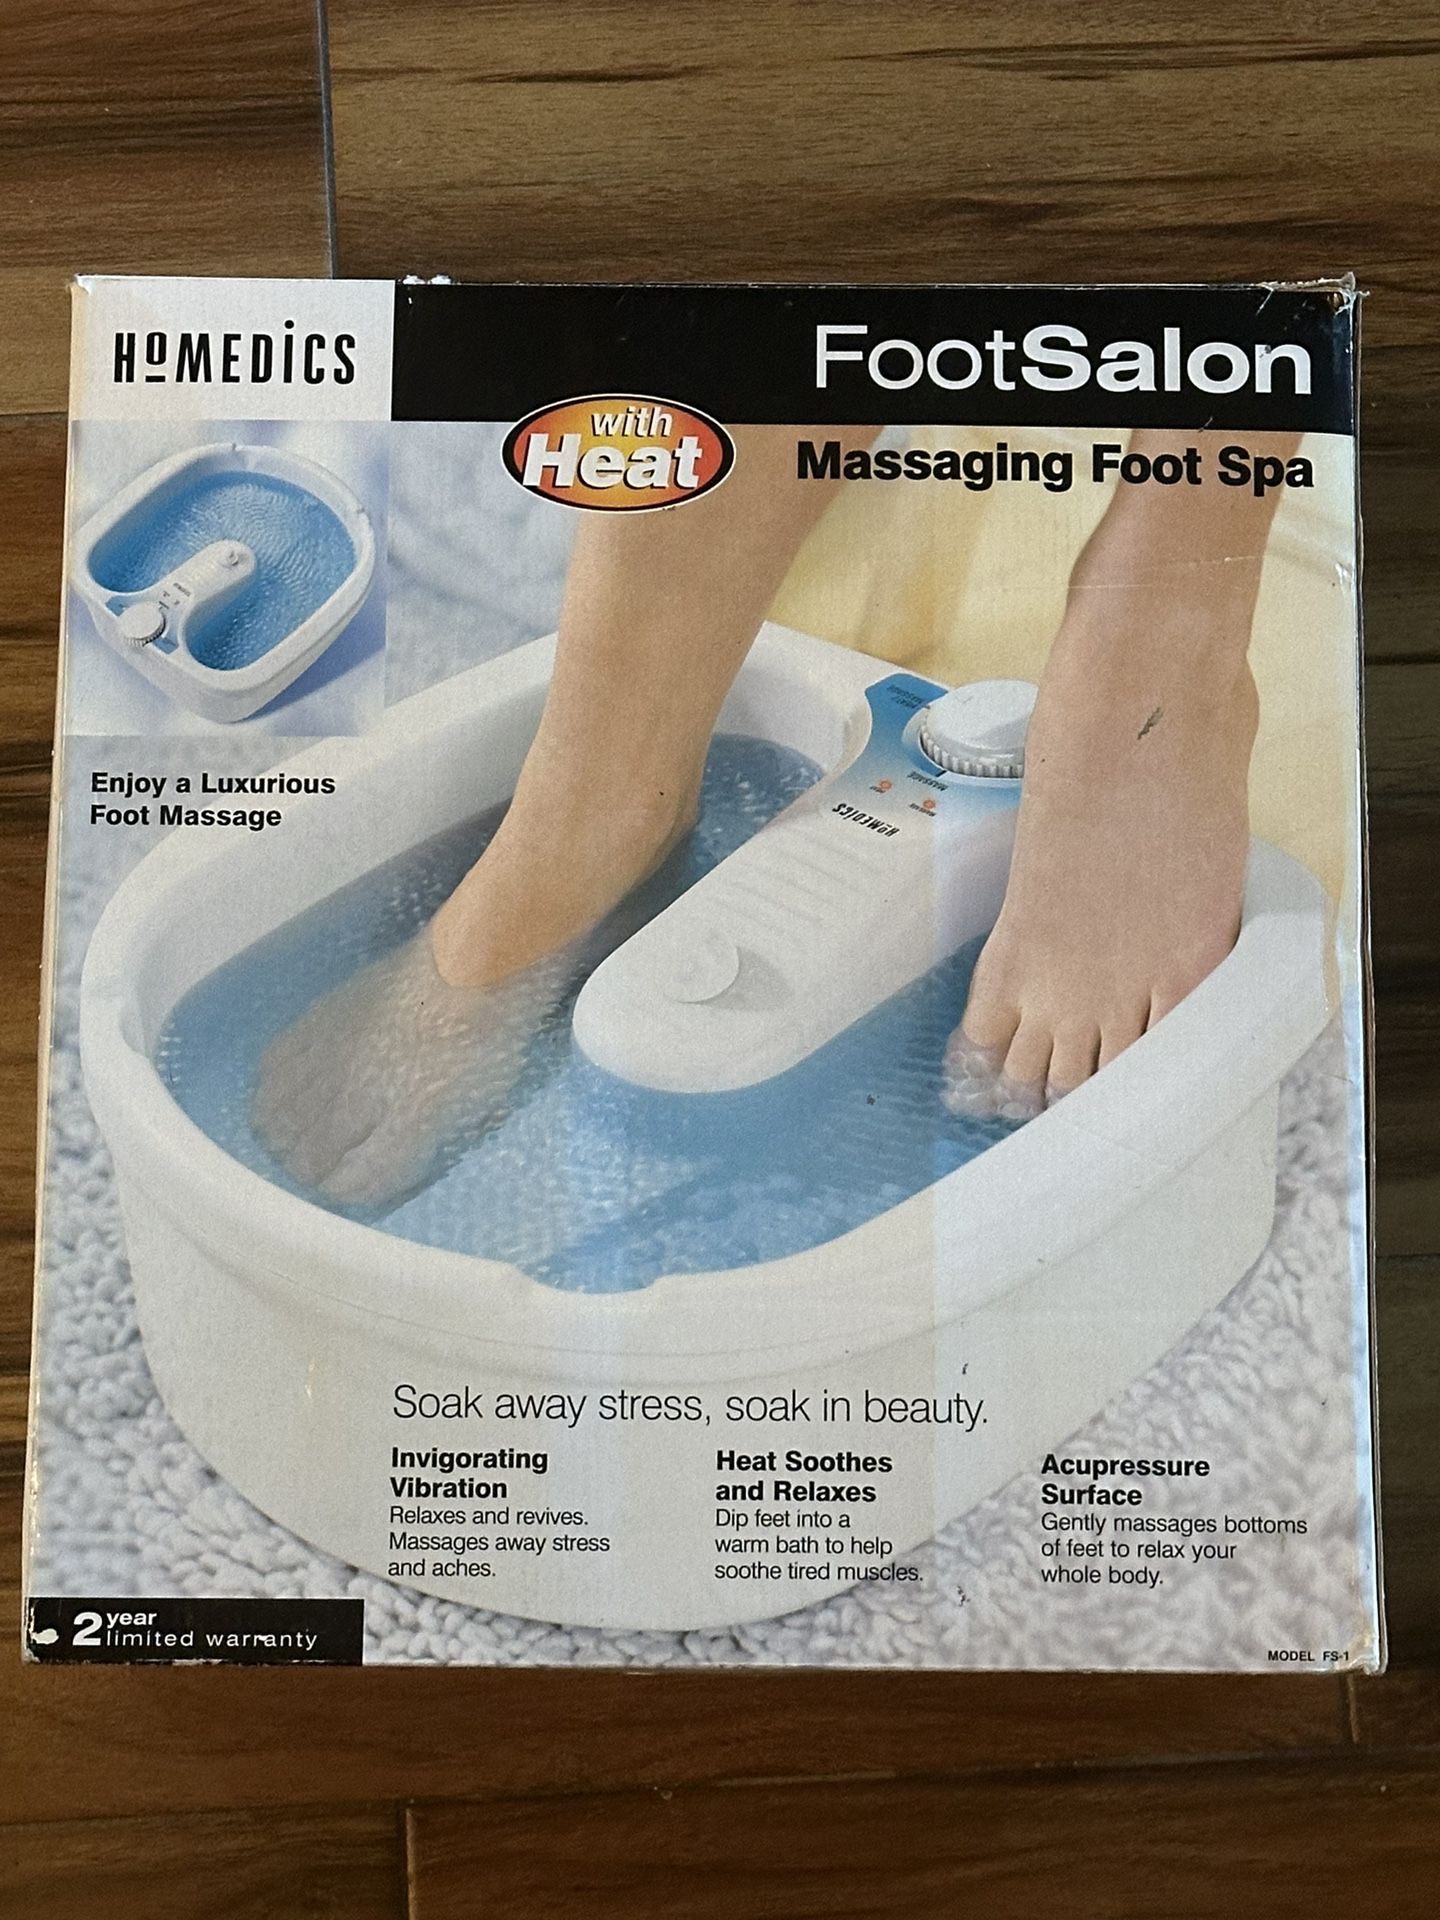 Foot Salon